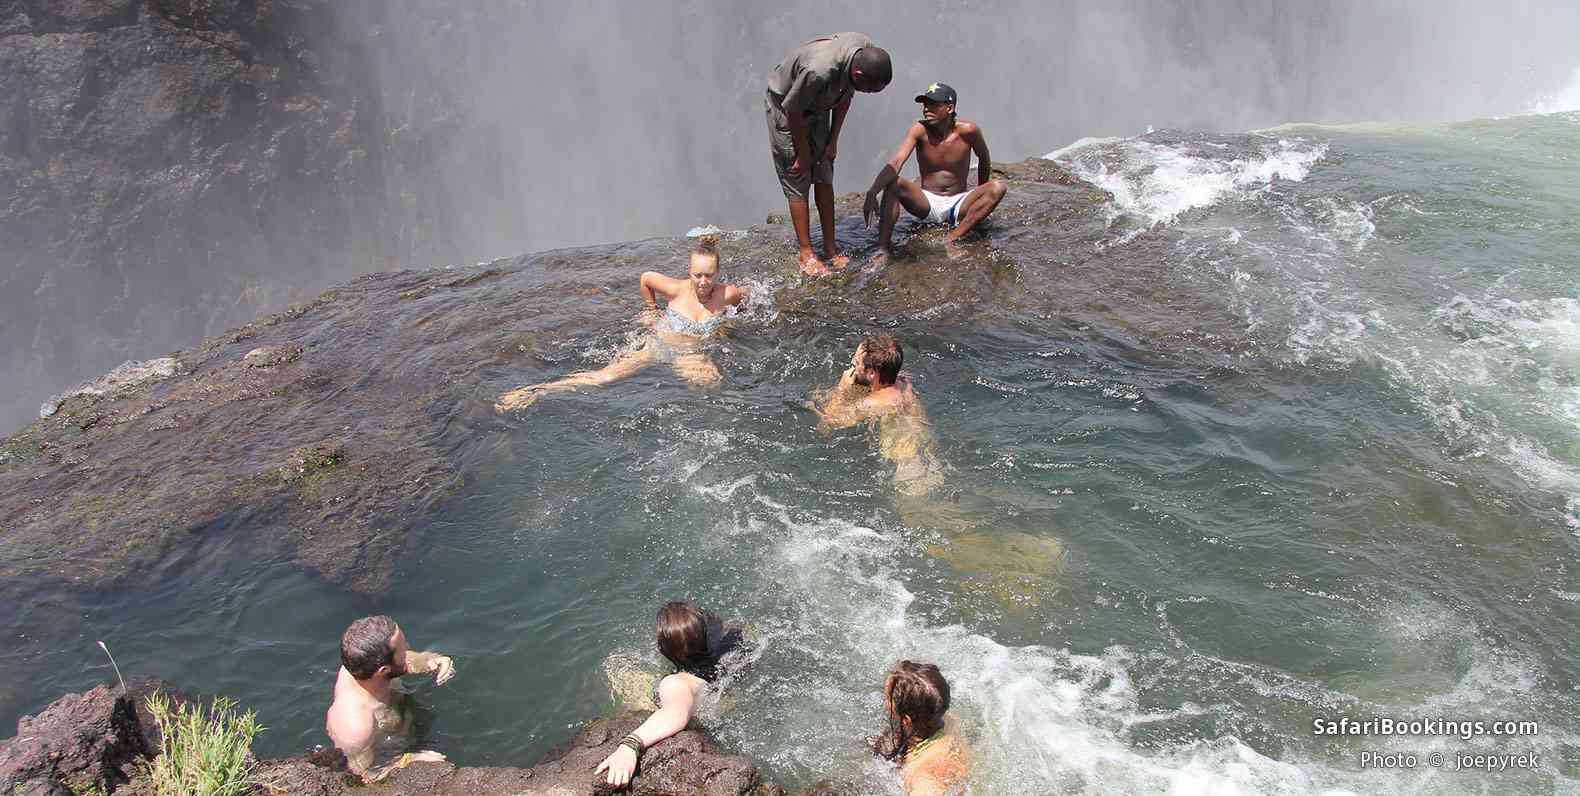 Devil's Pool in Zambia. Source: flickr.com/photos/joepyrek/8301648482